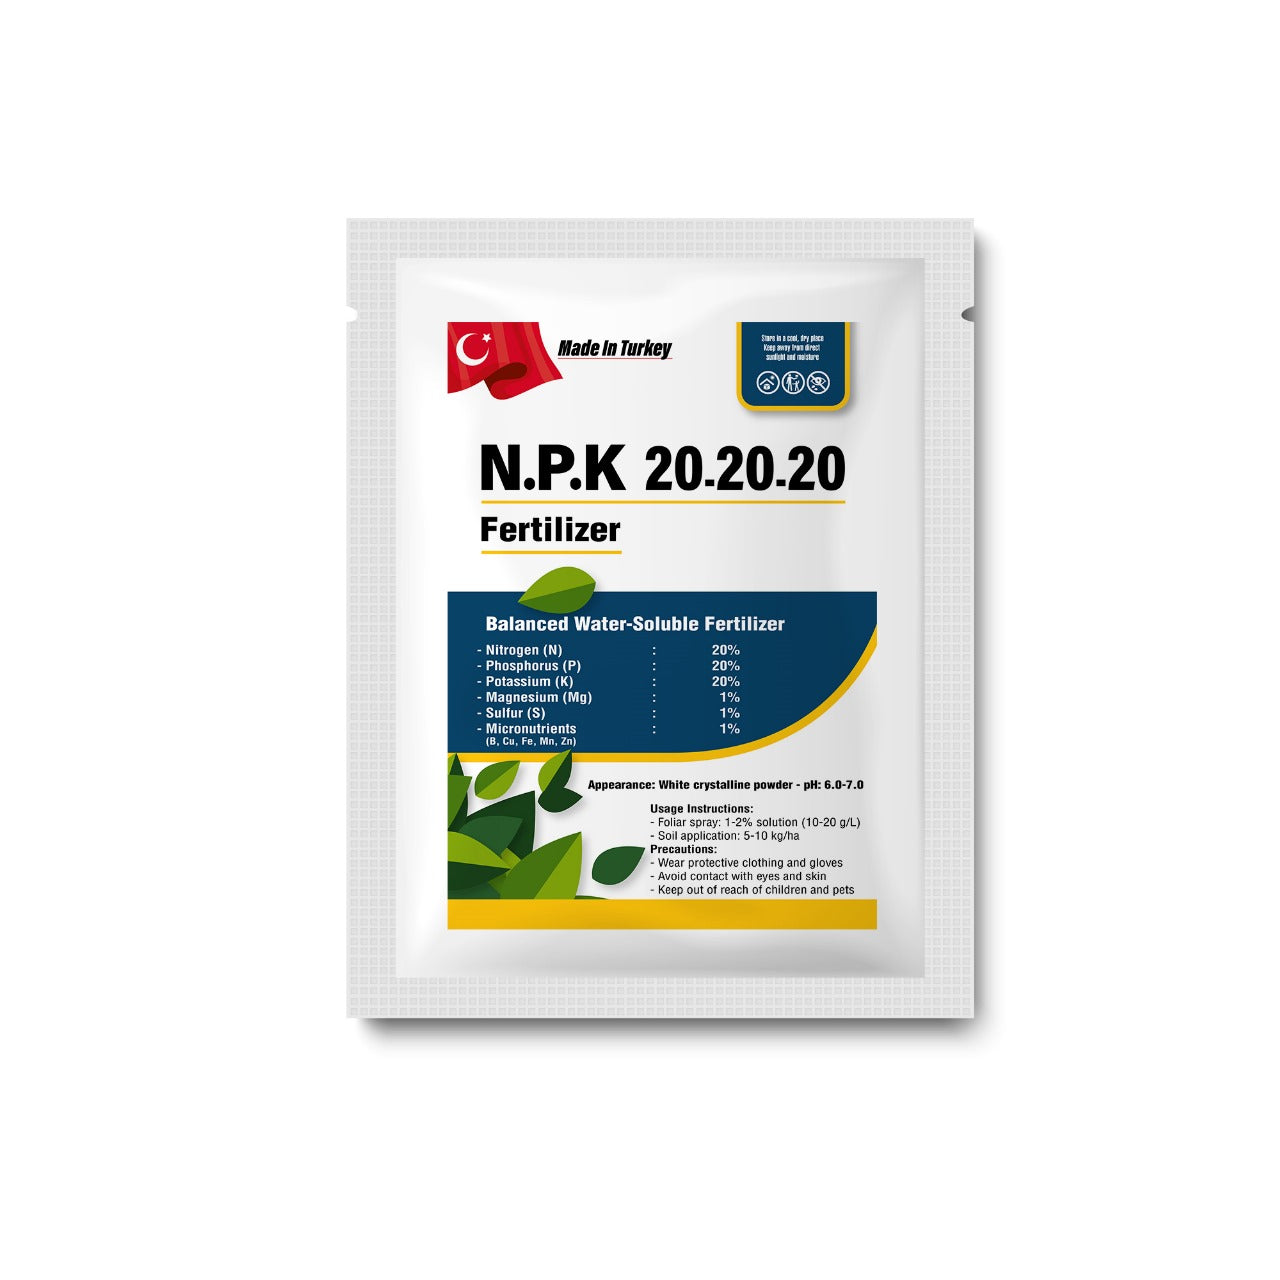 N.P.K 20-20-20 Fertilizer made in turkey (Powder Form) - 1 kg Pack